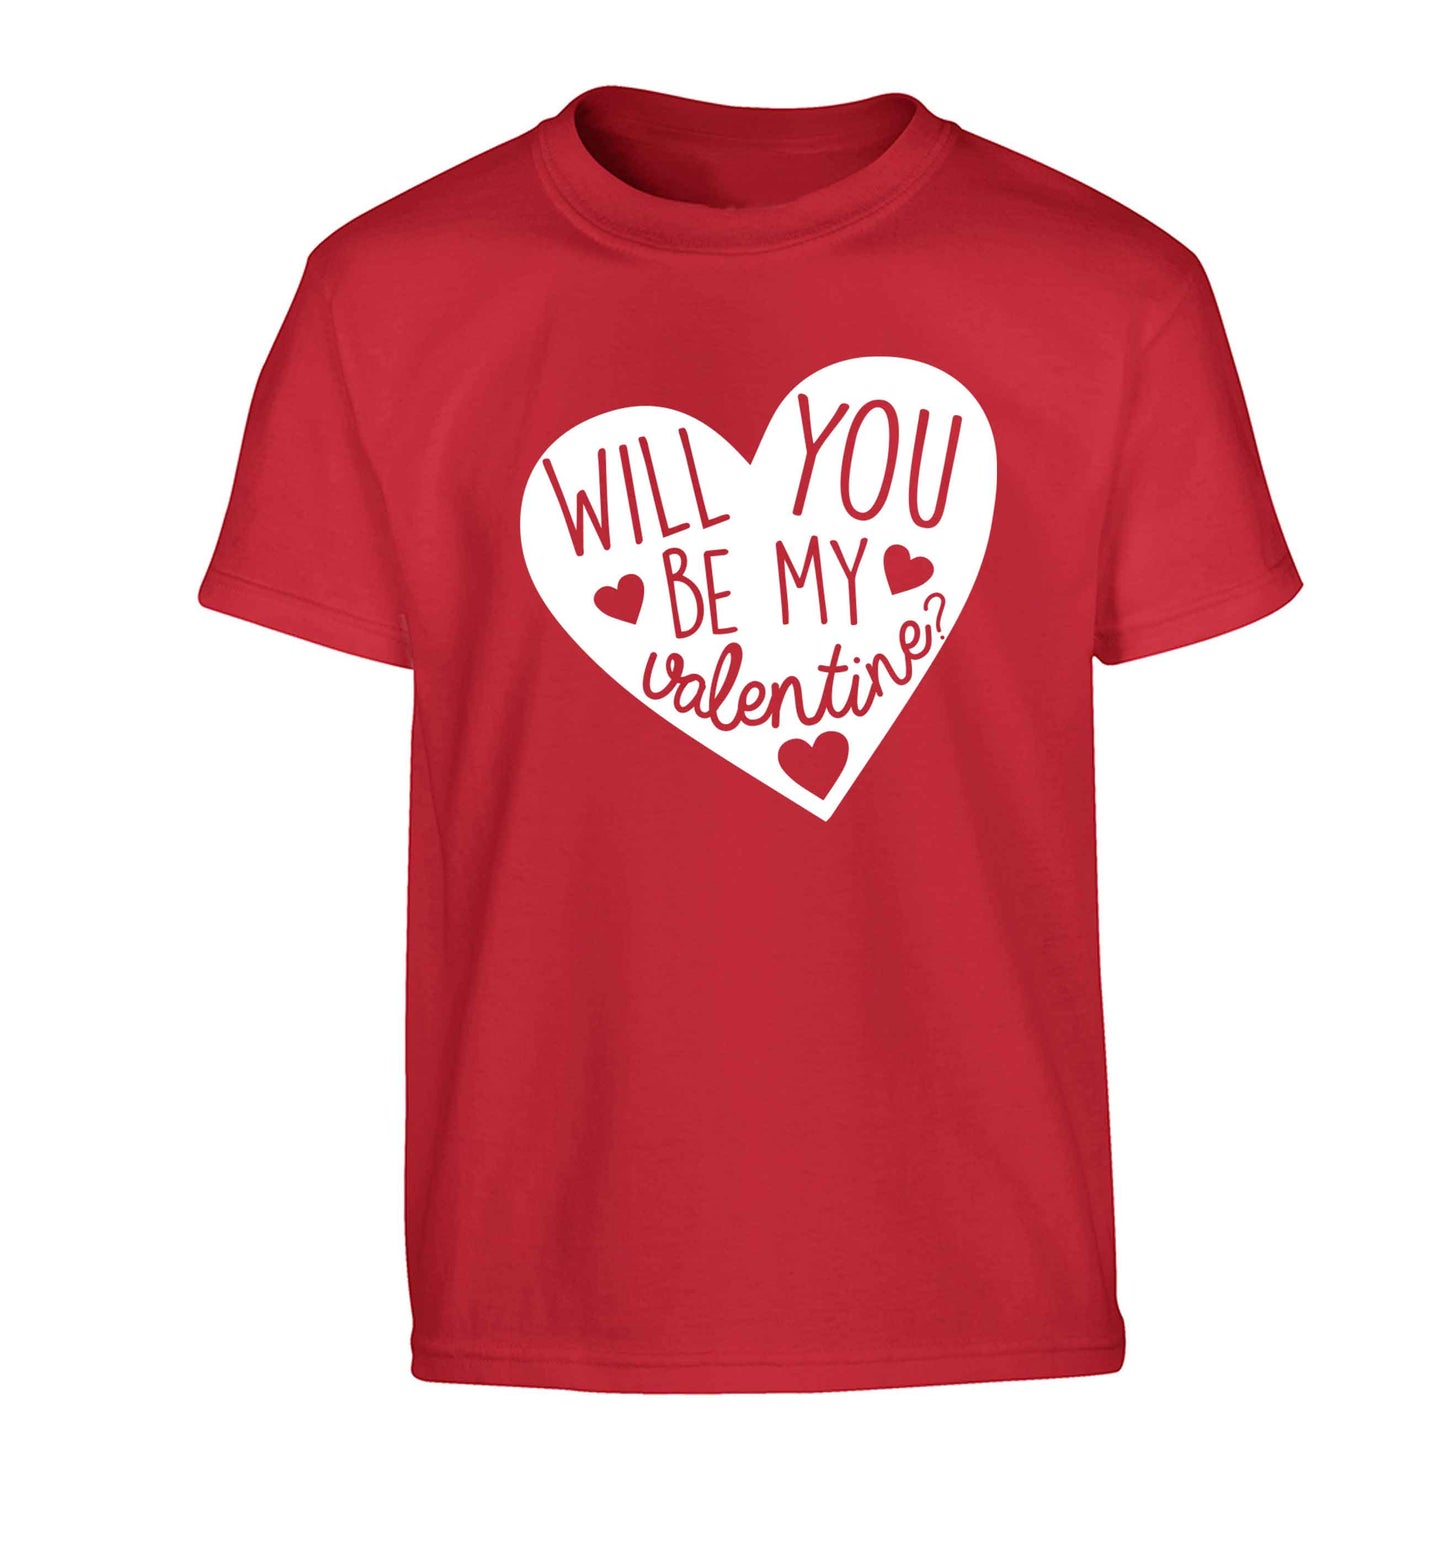 Will you be my valentine? Children's red Tshirt 12-13 Years